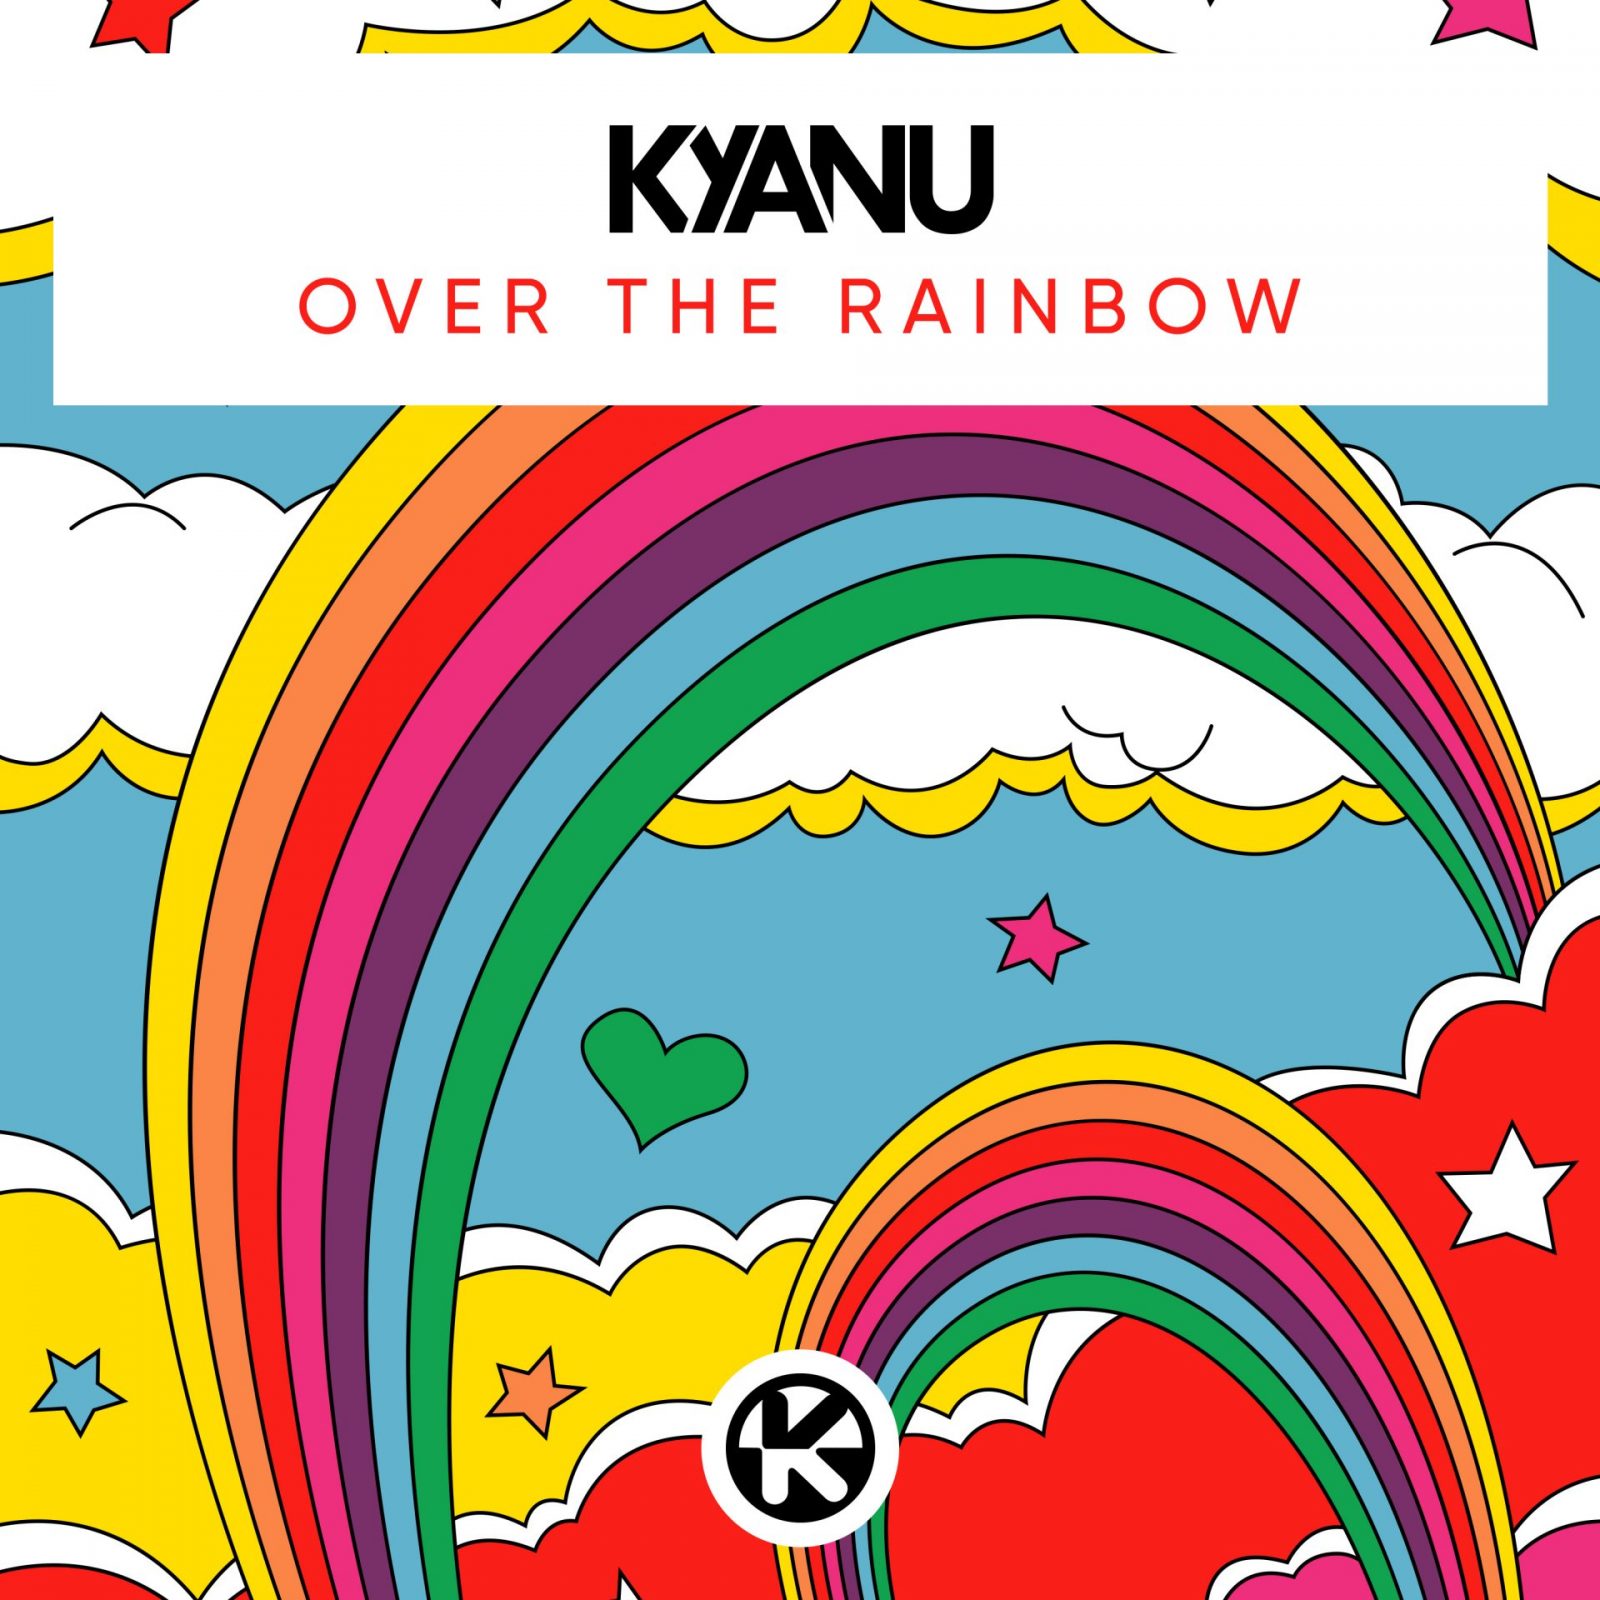 Kyanu "Over The Rainbow"